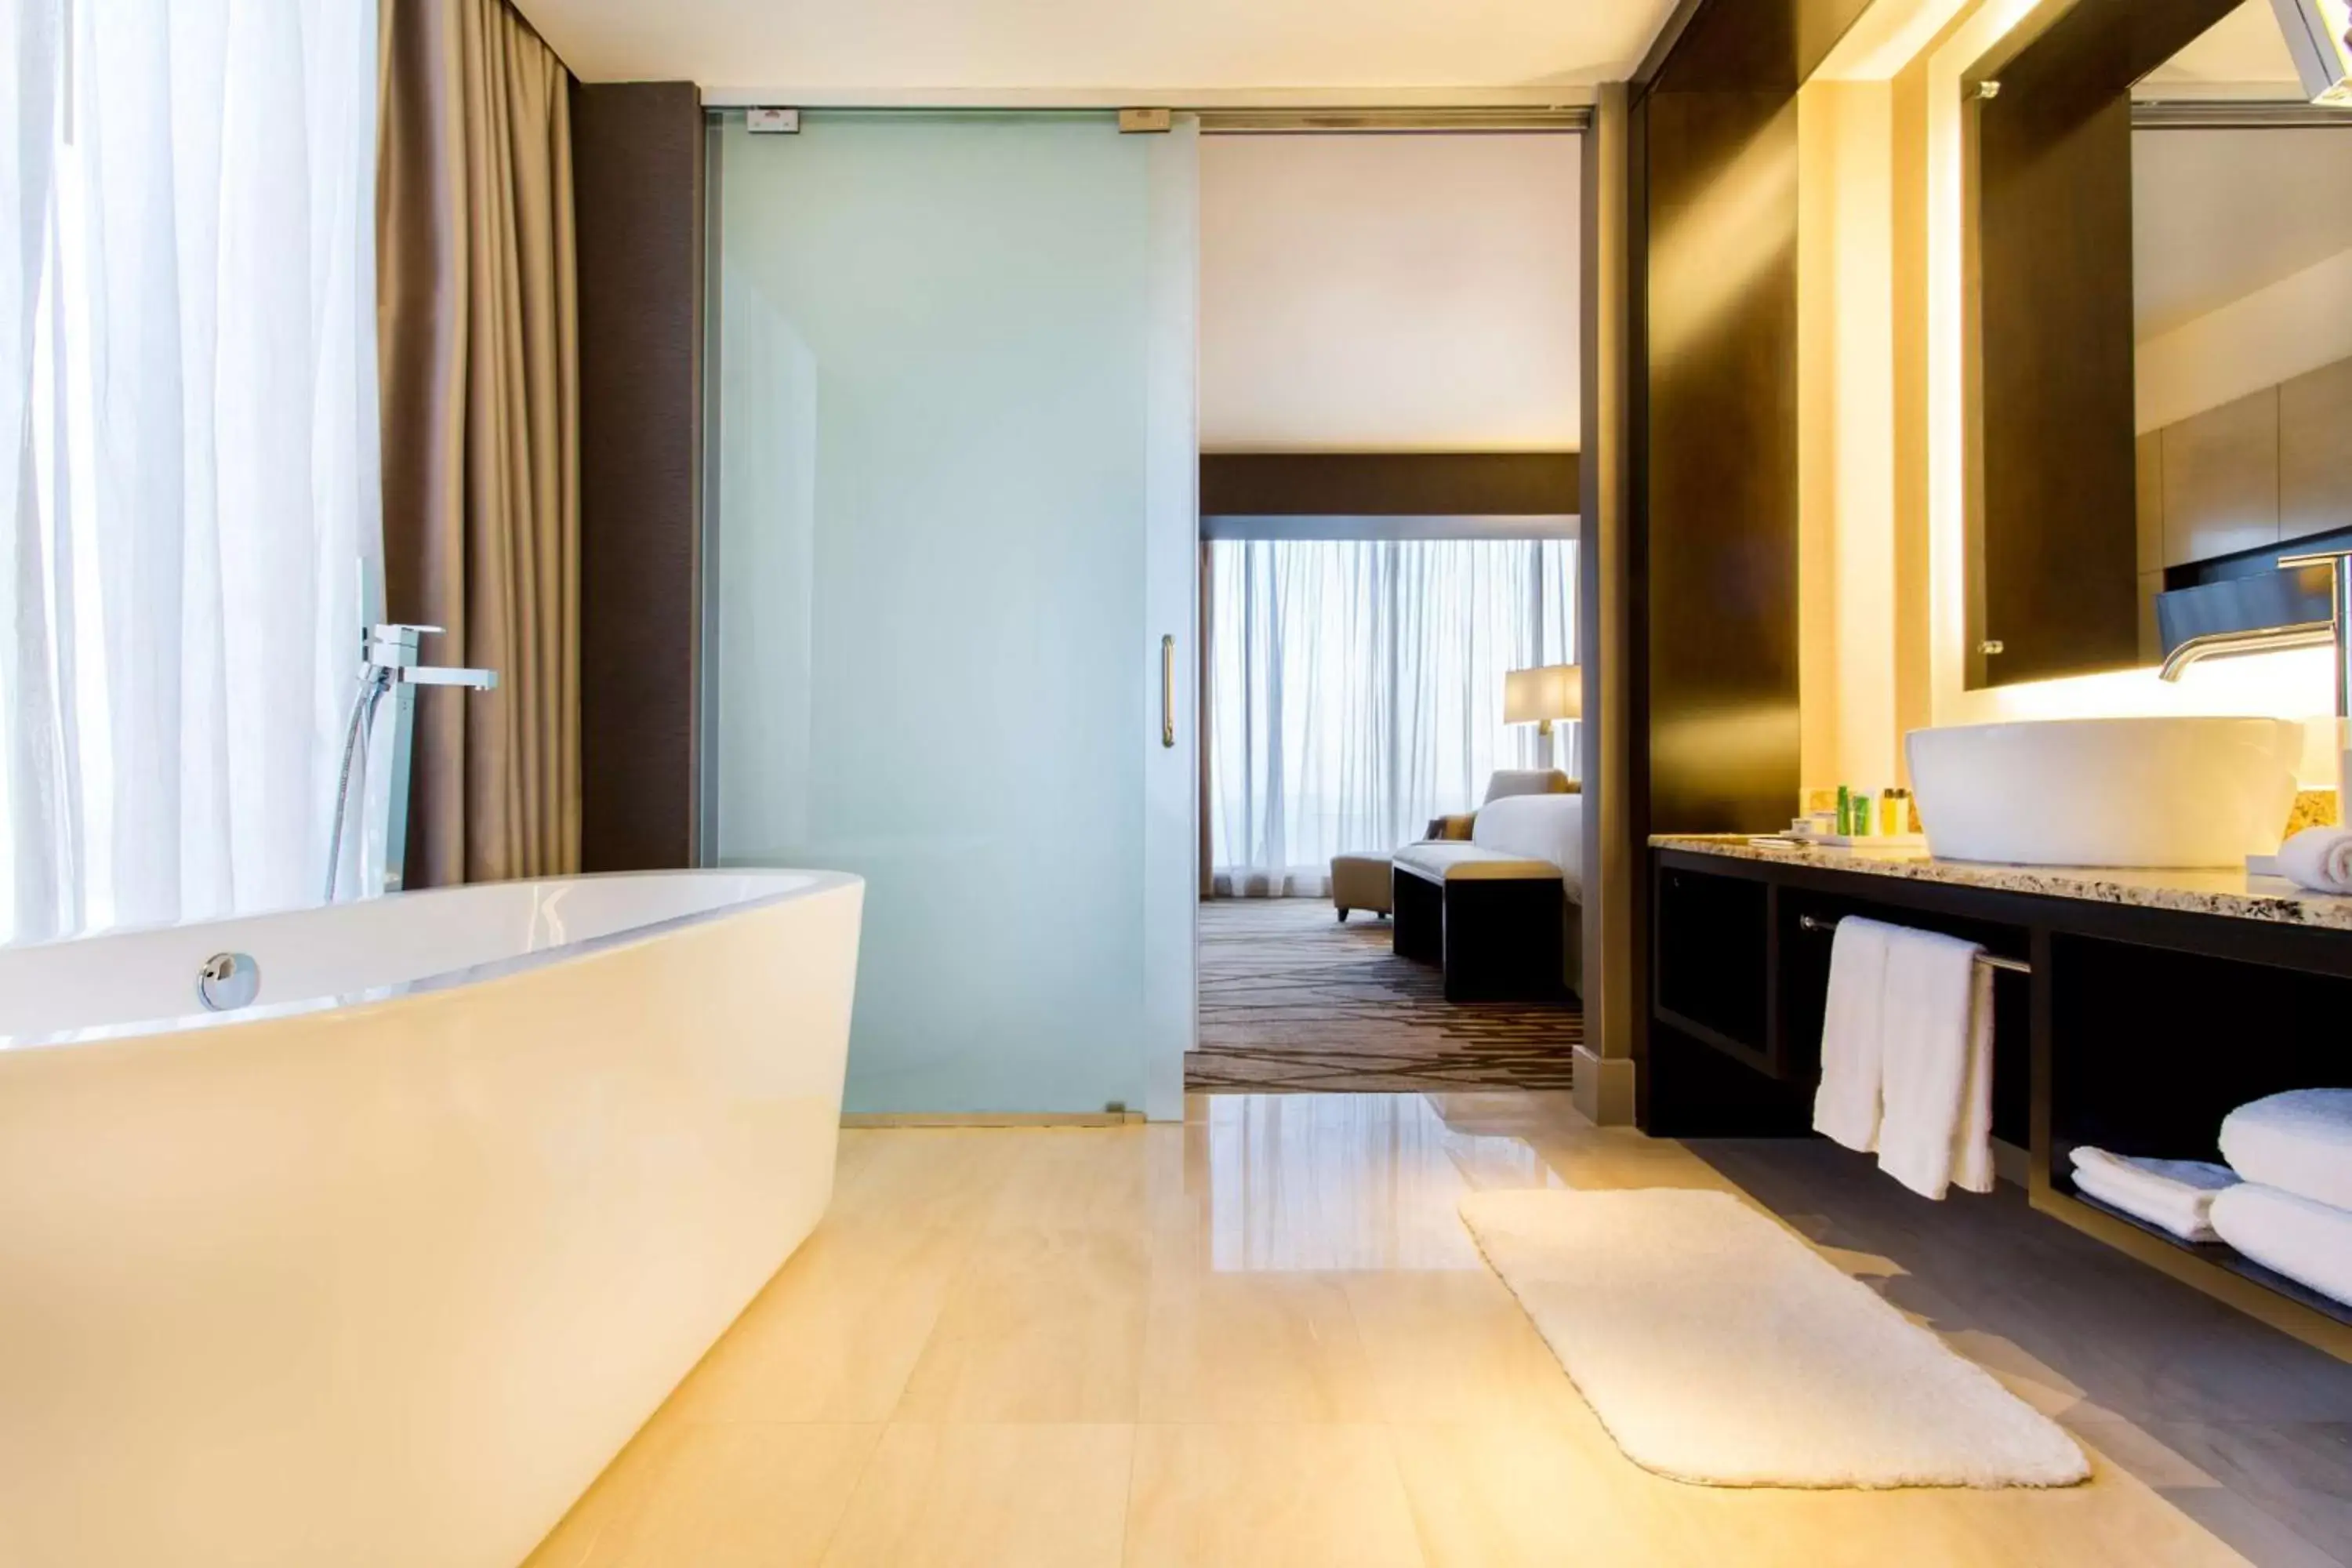 Bathroom in Hilton Panama